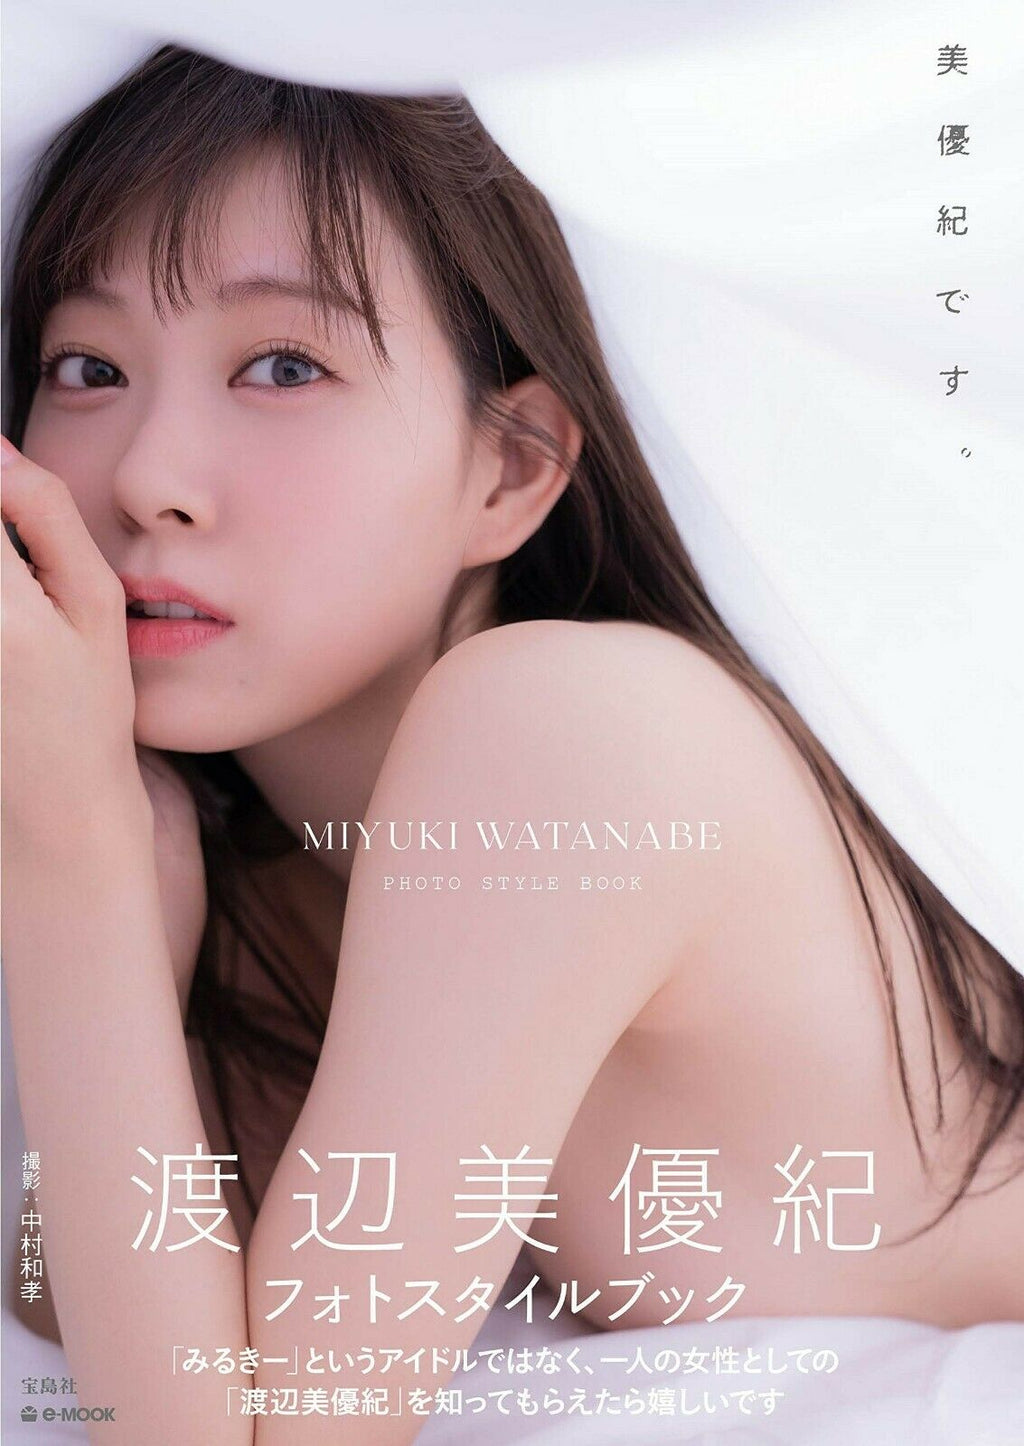 NEW' Miyuki Watanabe Photo Style Book | Japanese Idol AKB48 NMB48